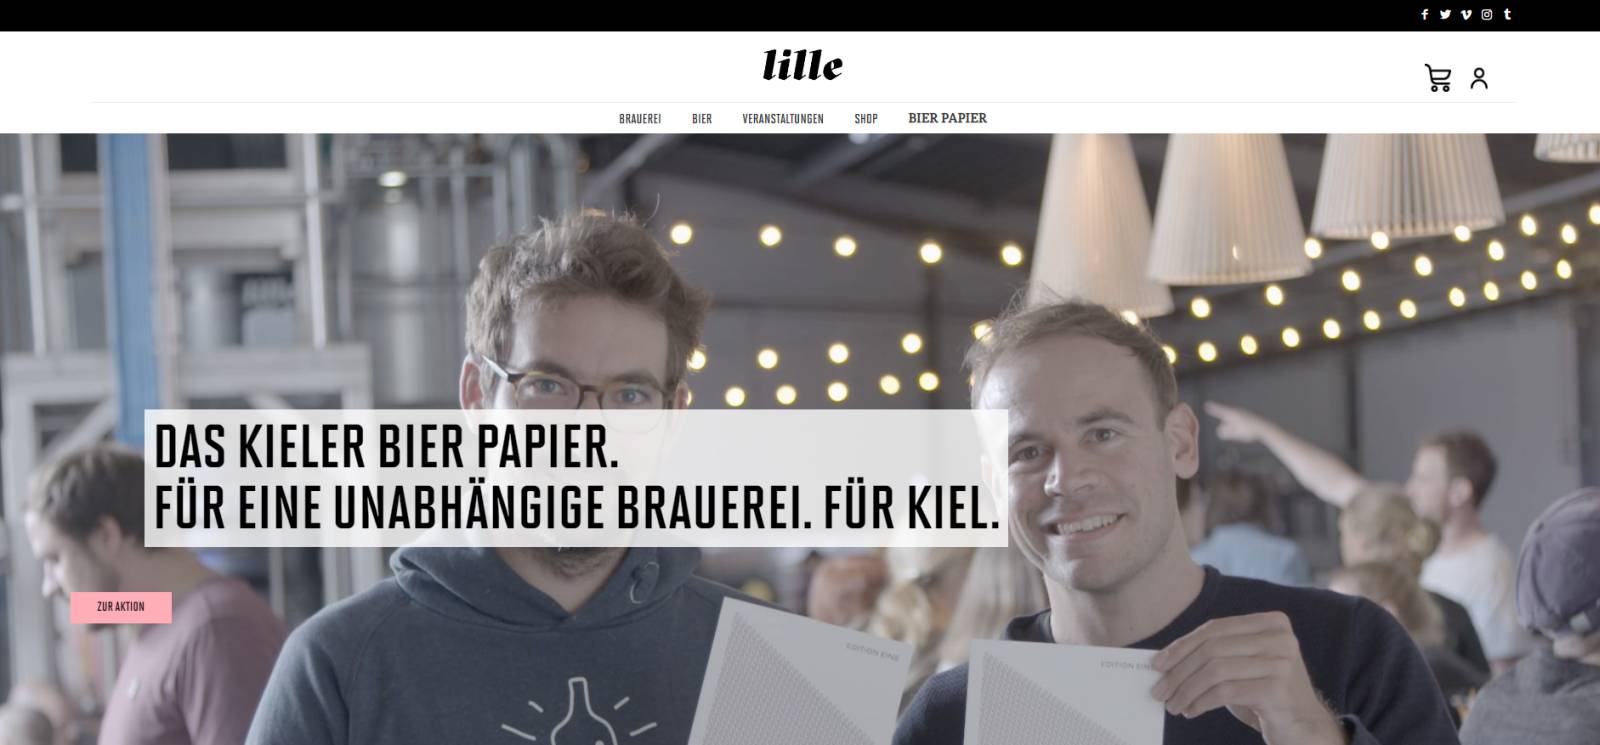 lille Brauerei Kiel Homepage Bier Papier